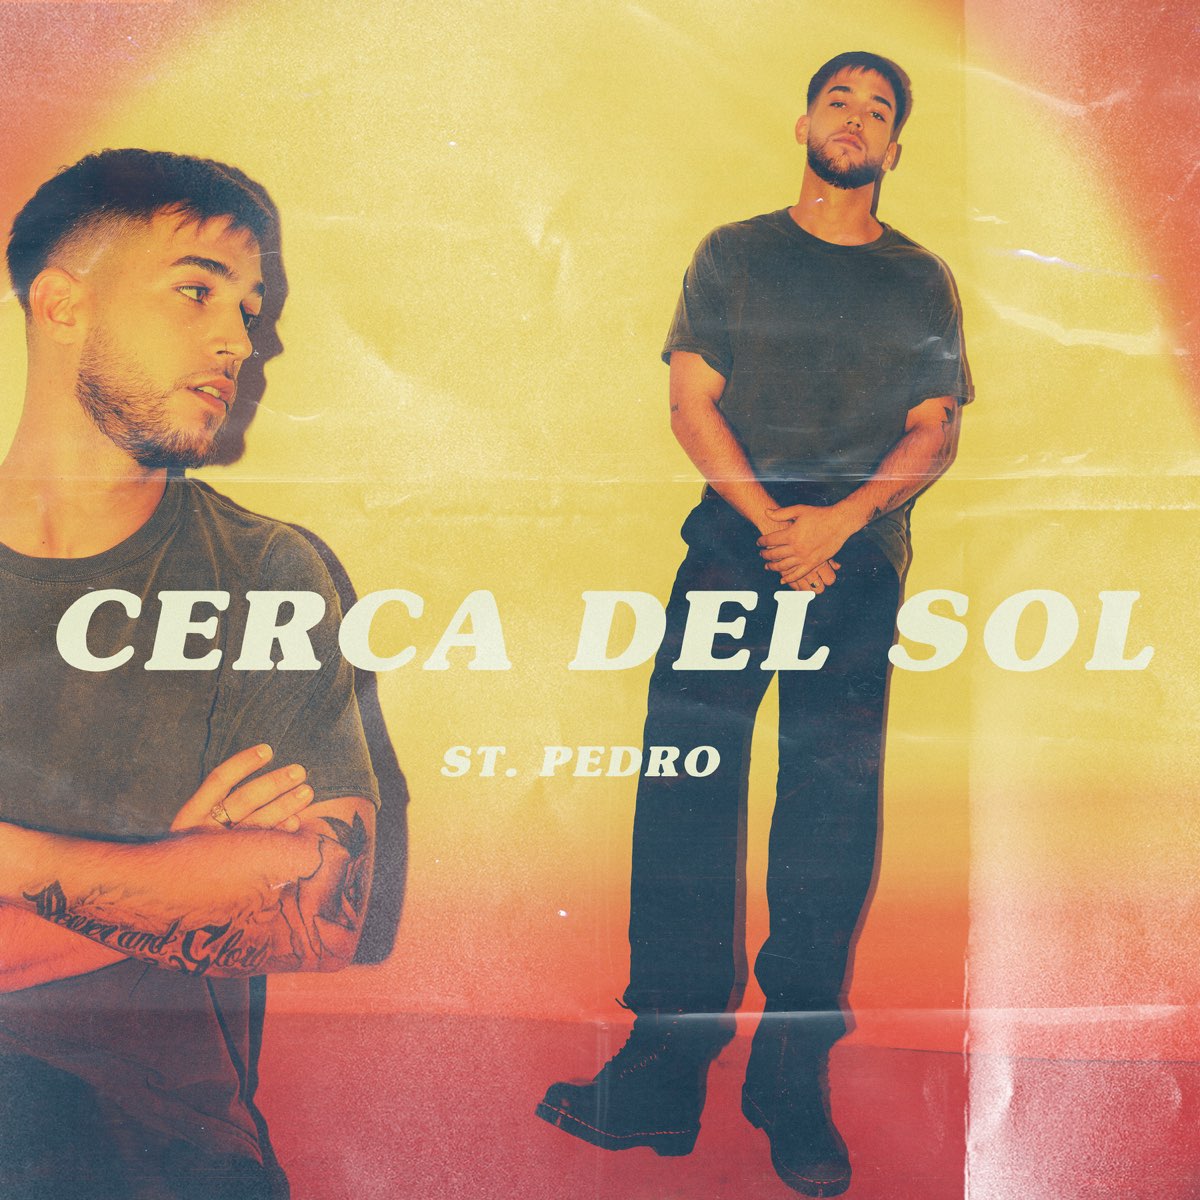 На каком языке песня pedro. Песни про Педро. Педро текст. The Life of Pedro альбом. Песня про Педро который ослеп.